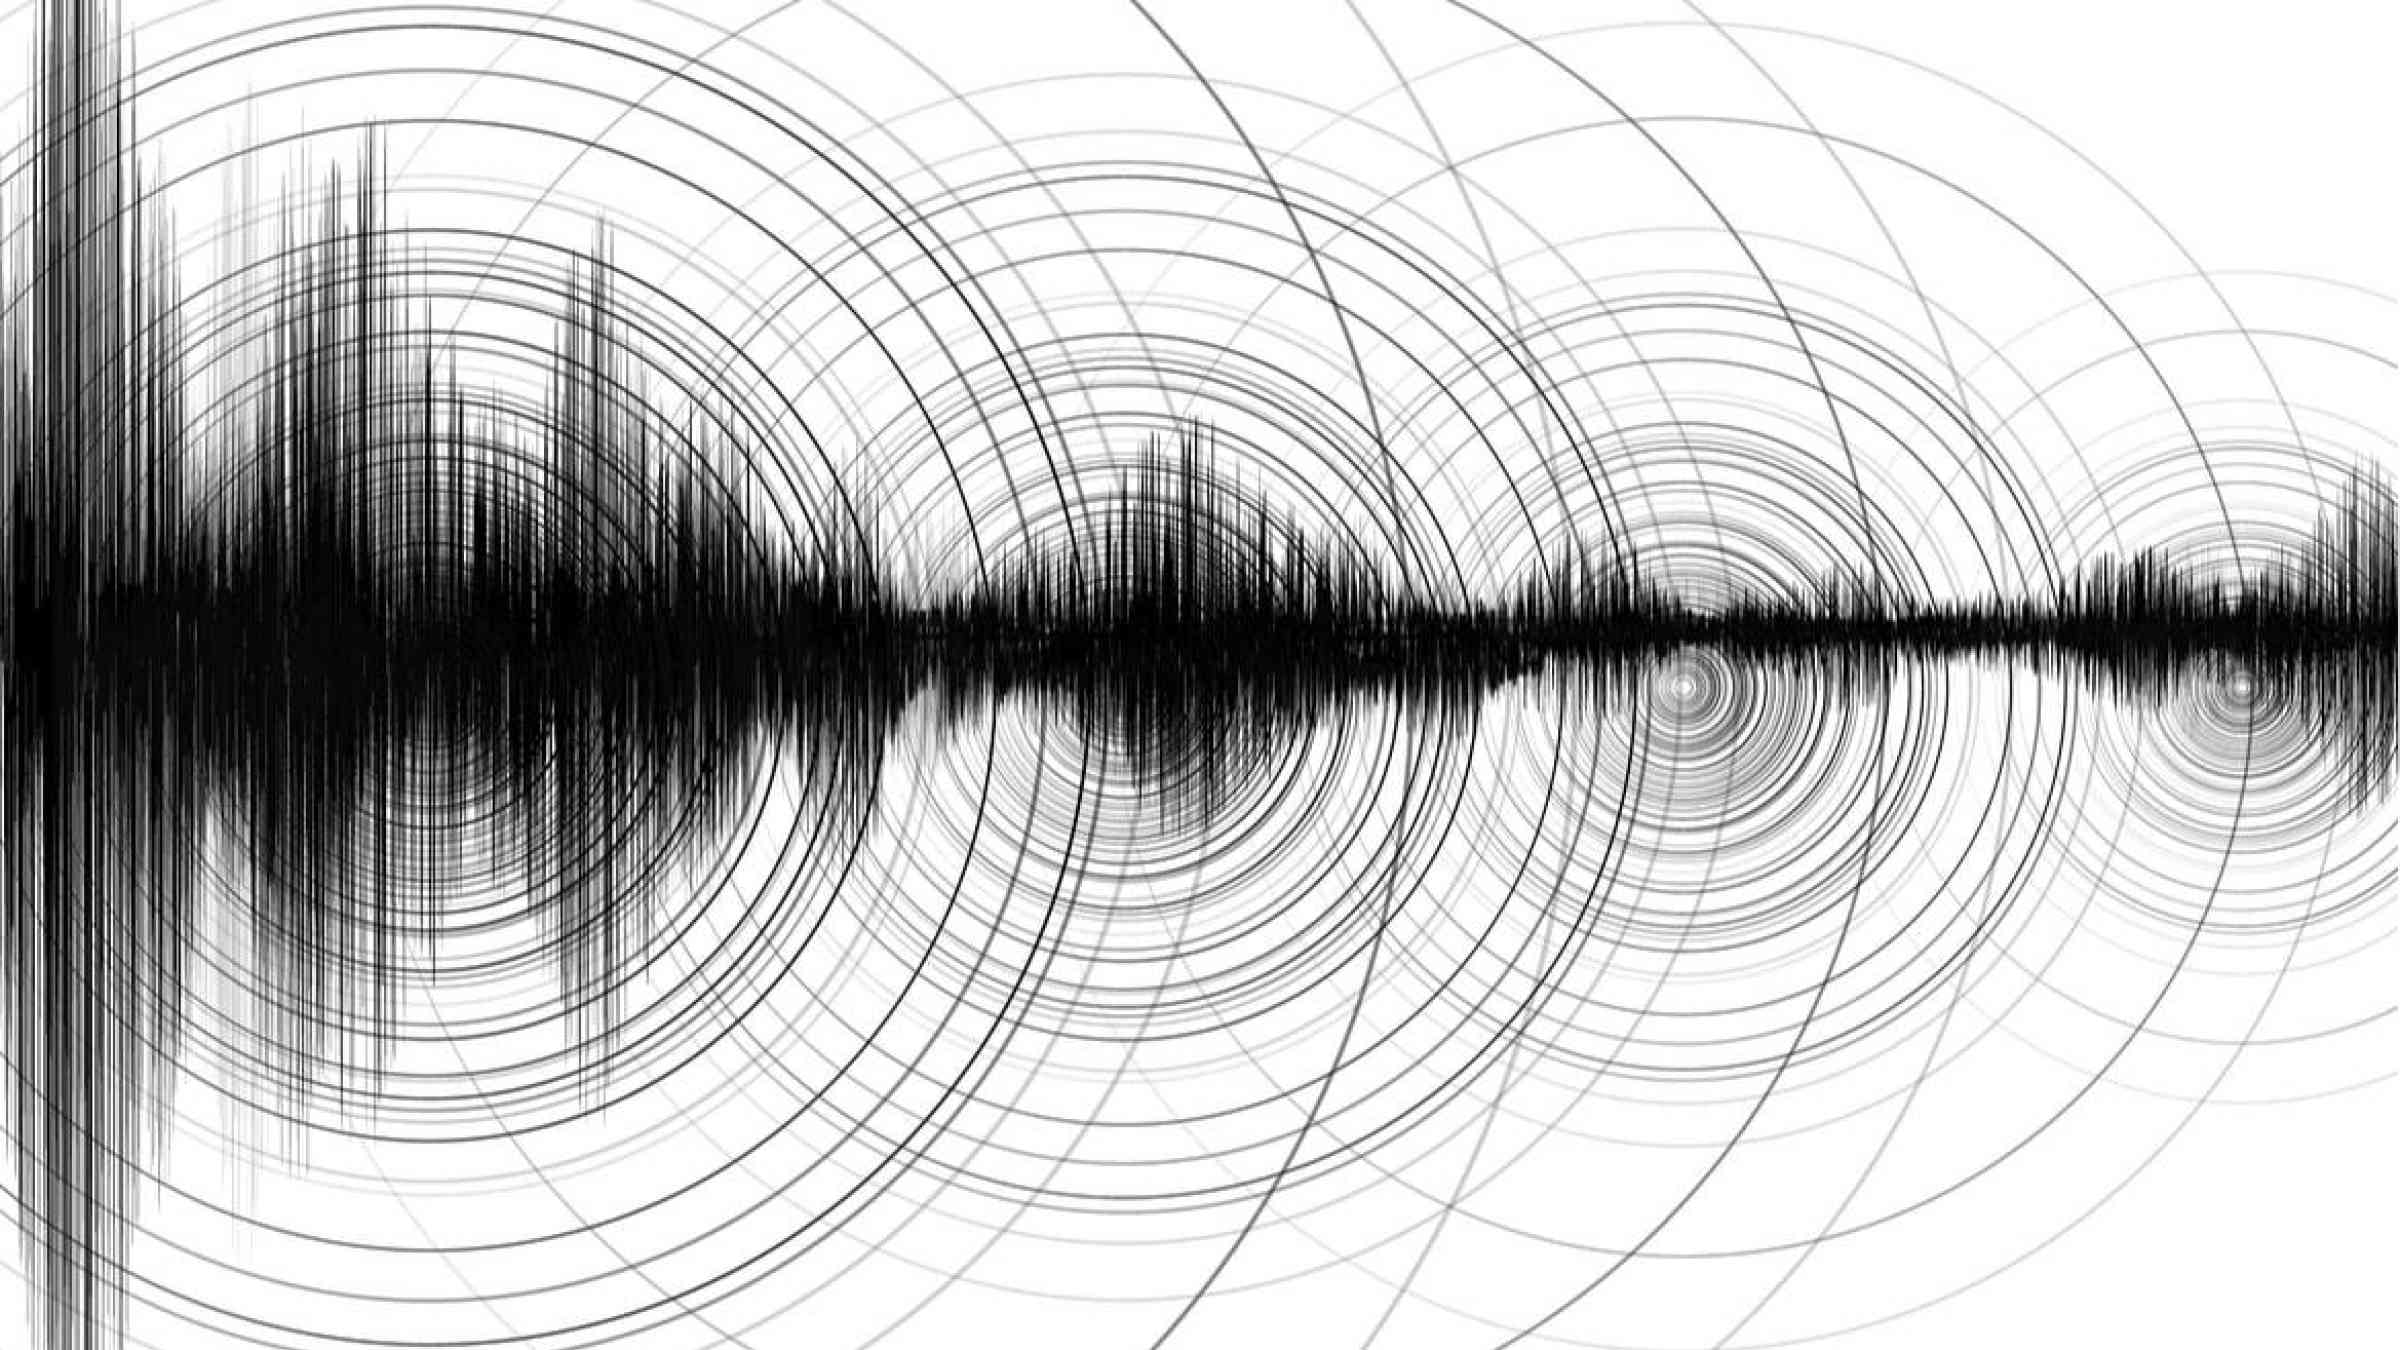 Earthquake wave and circle vibration